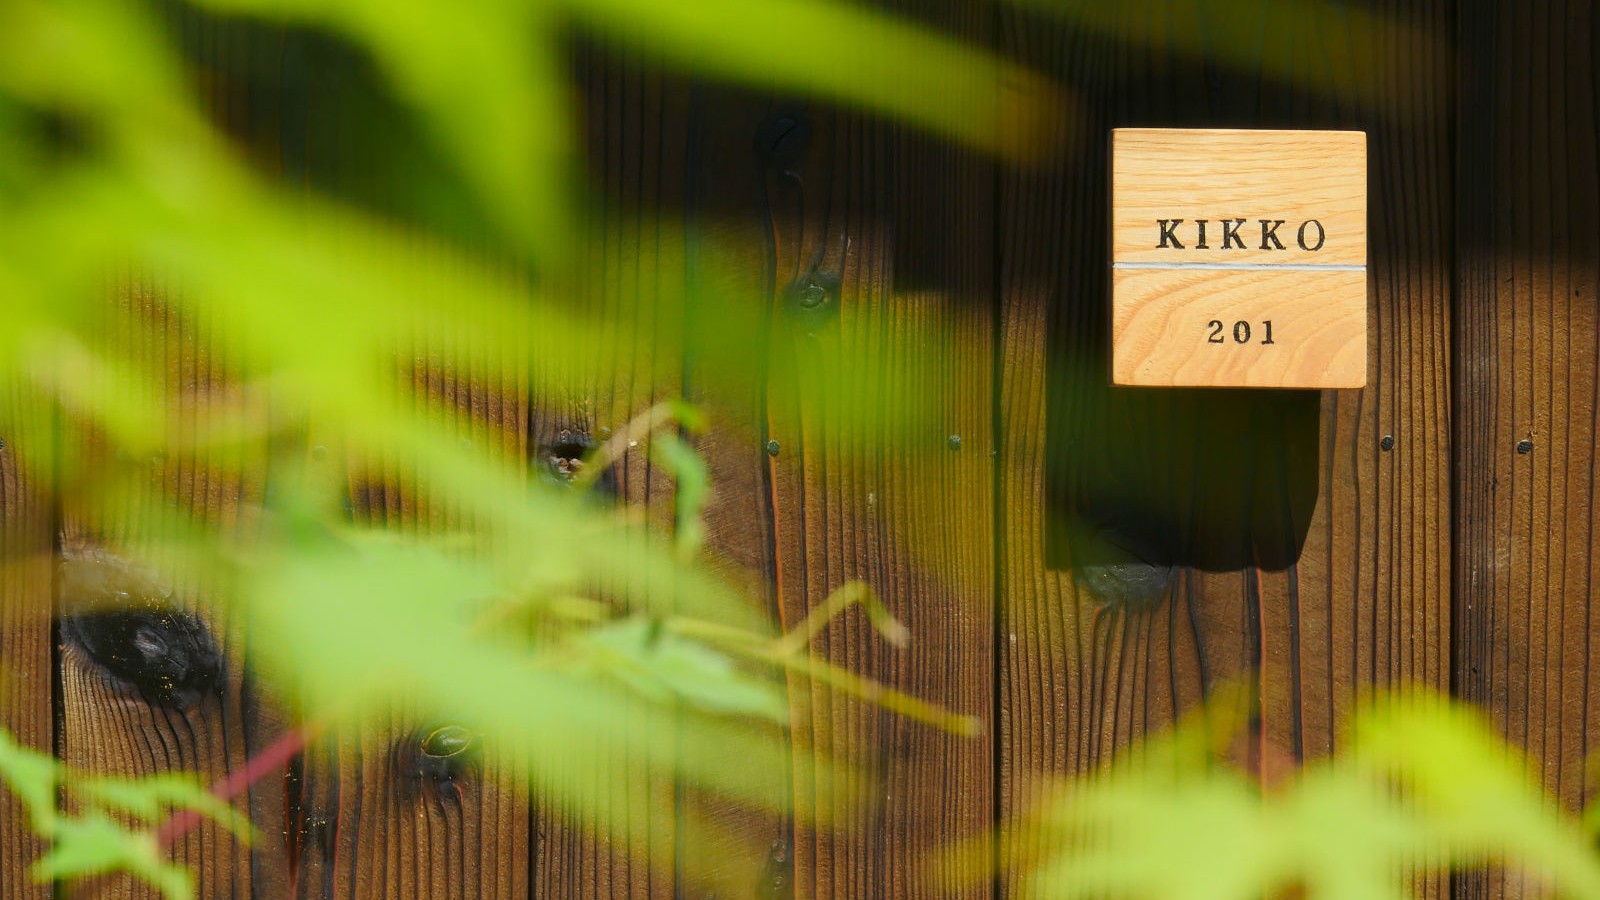 【KIKKO棟】宿泊棟の名前は、竹原の名産である竹の名から名付けられています。